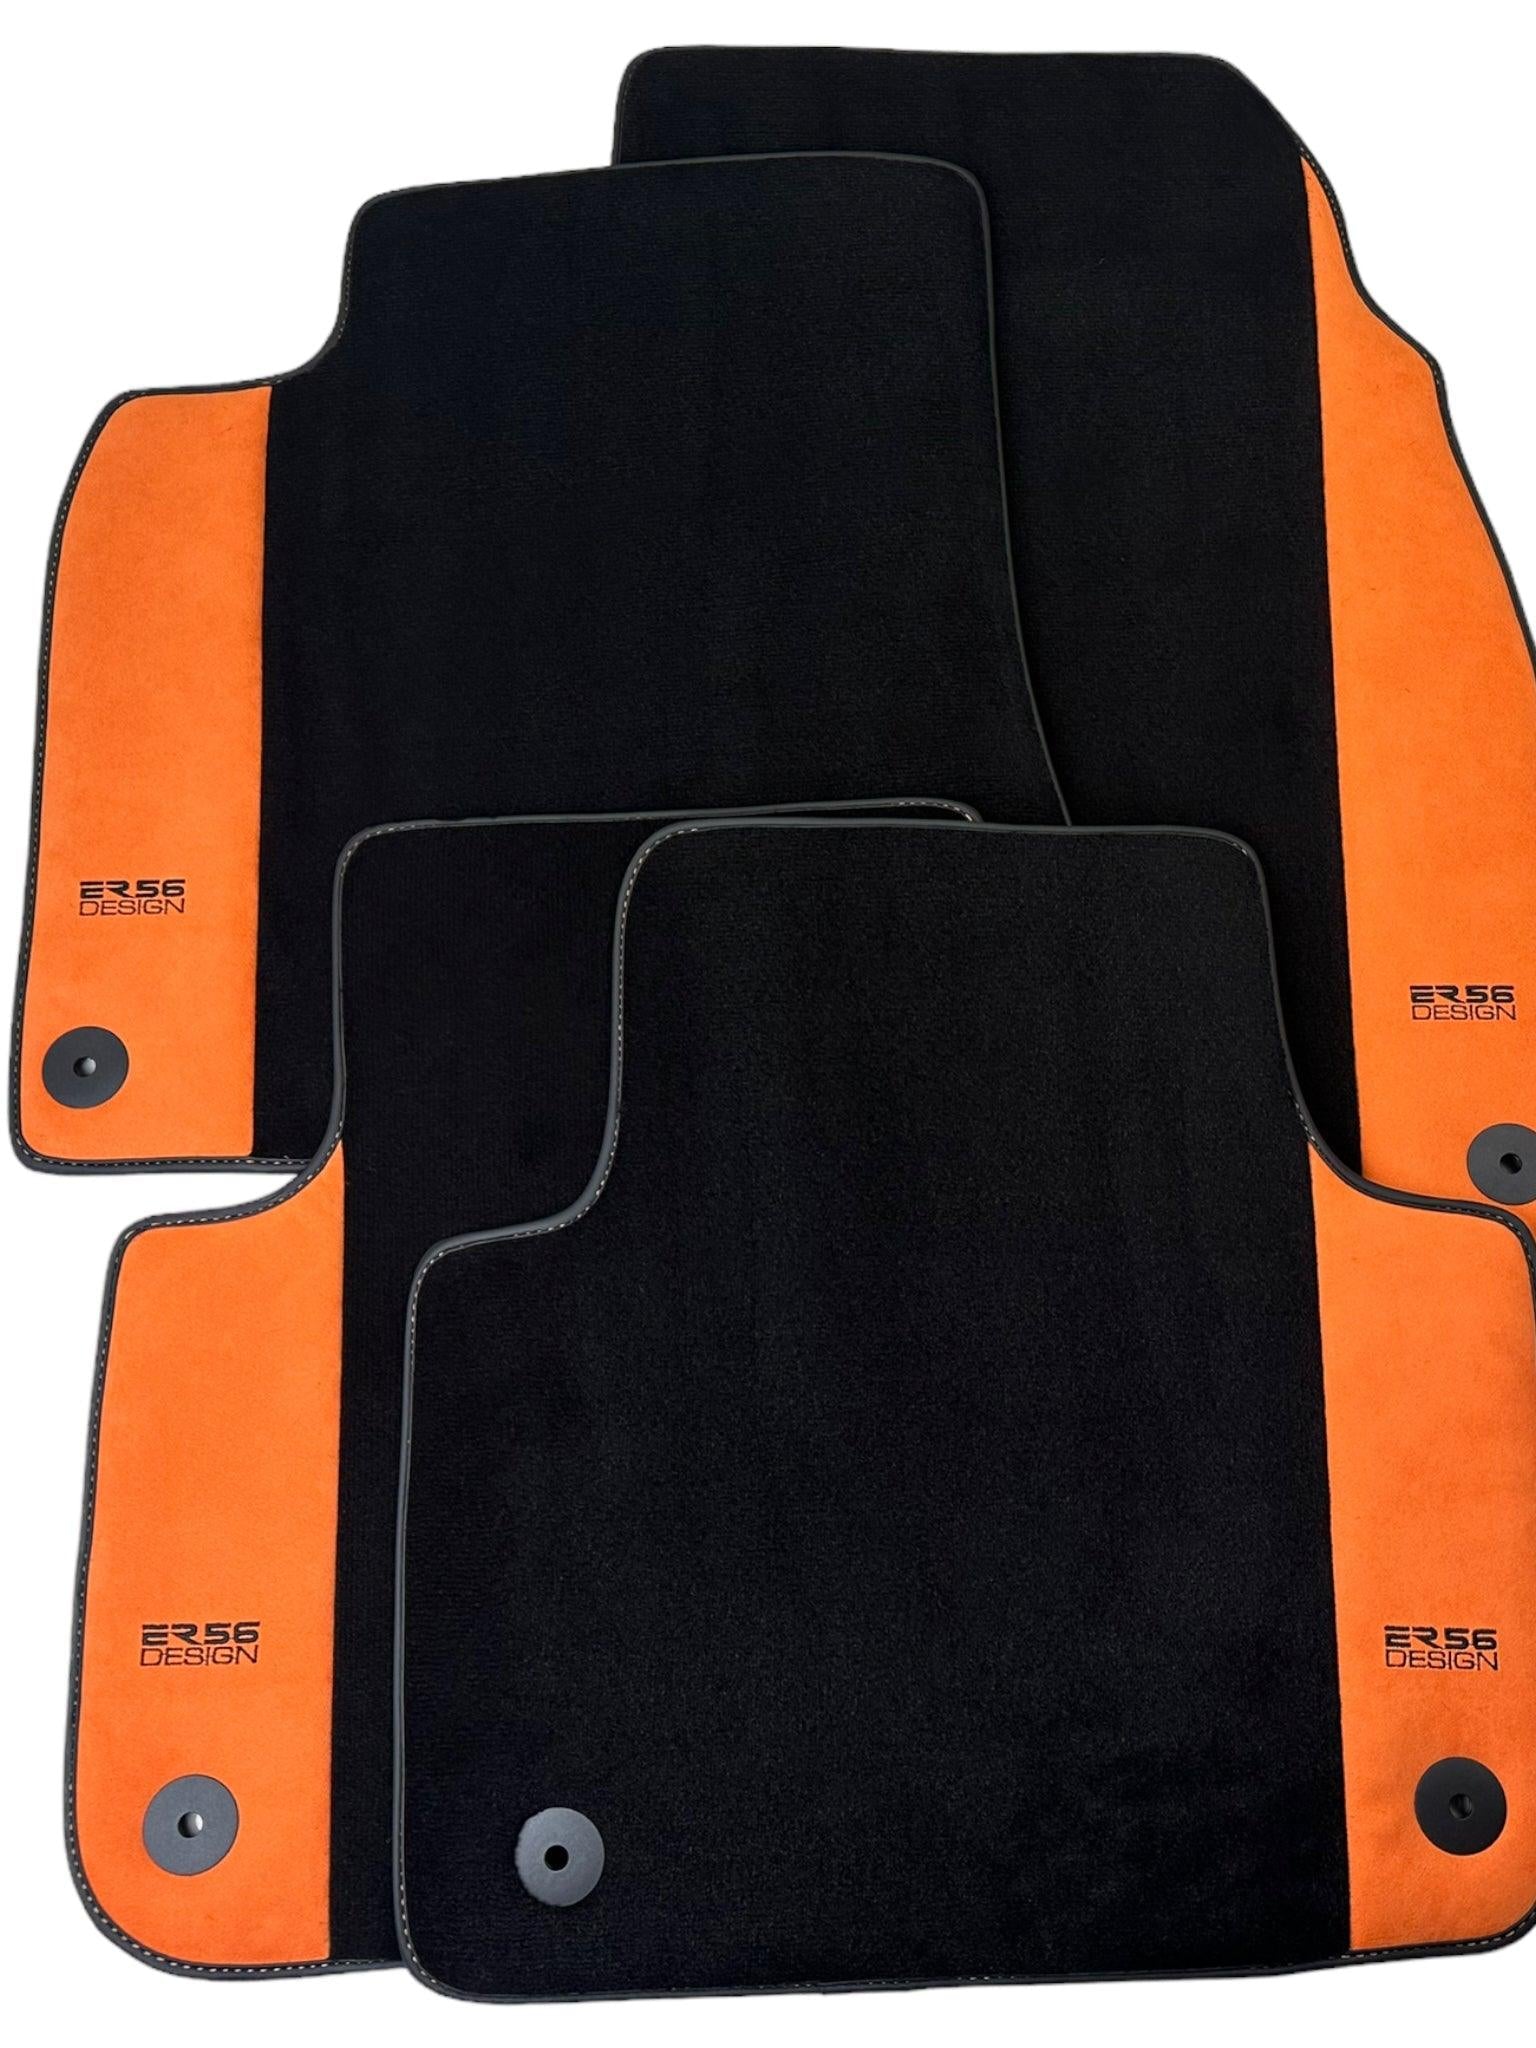 Black Floor Mats for Audi A2 2000-2005 8Z Orange Alcantara | ER56 Design